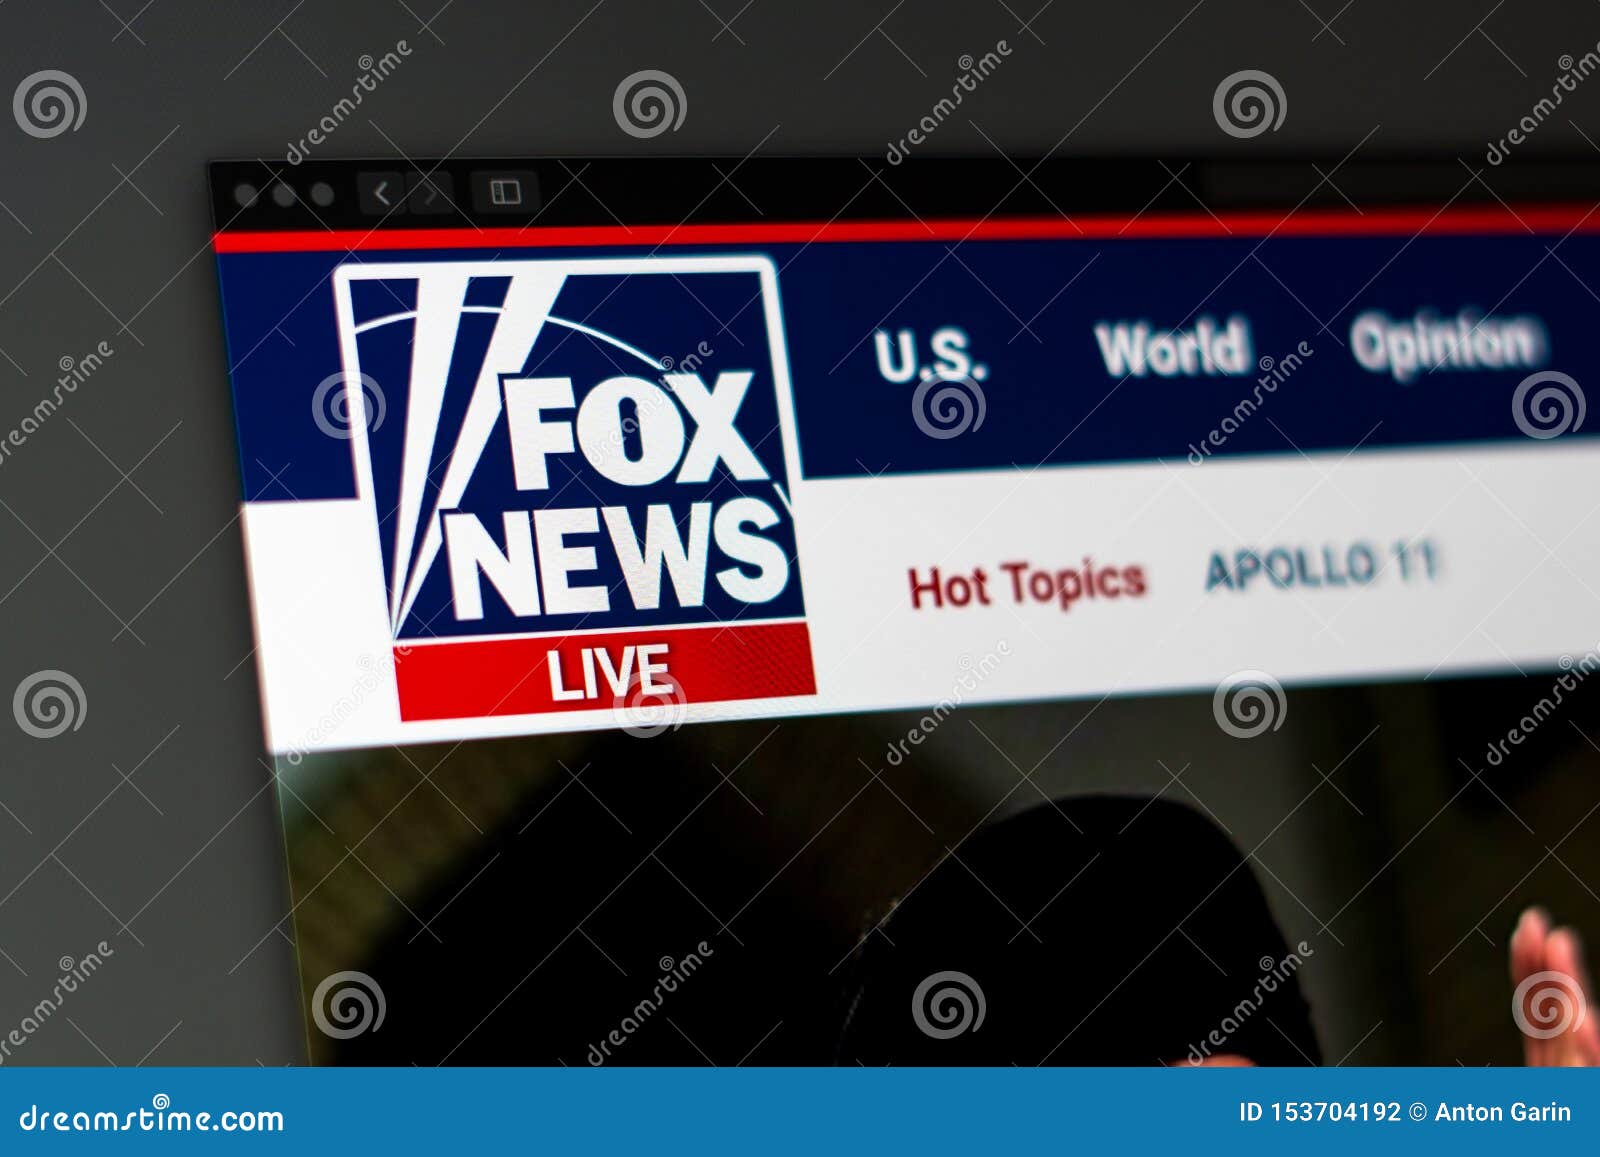 FOX News Live